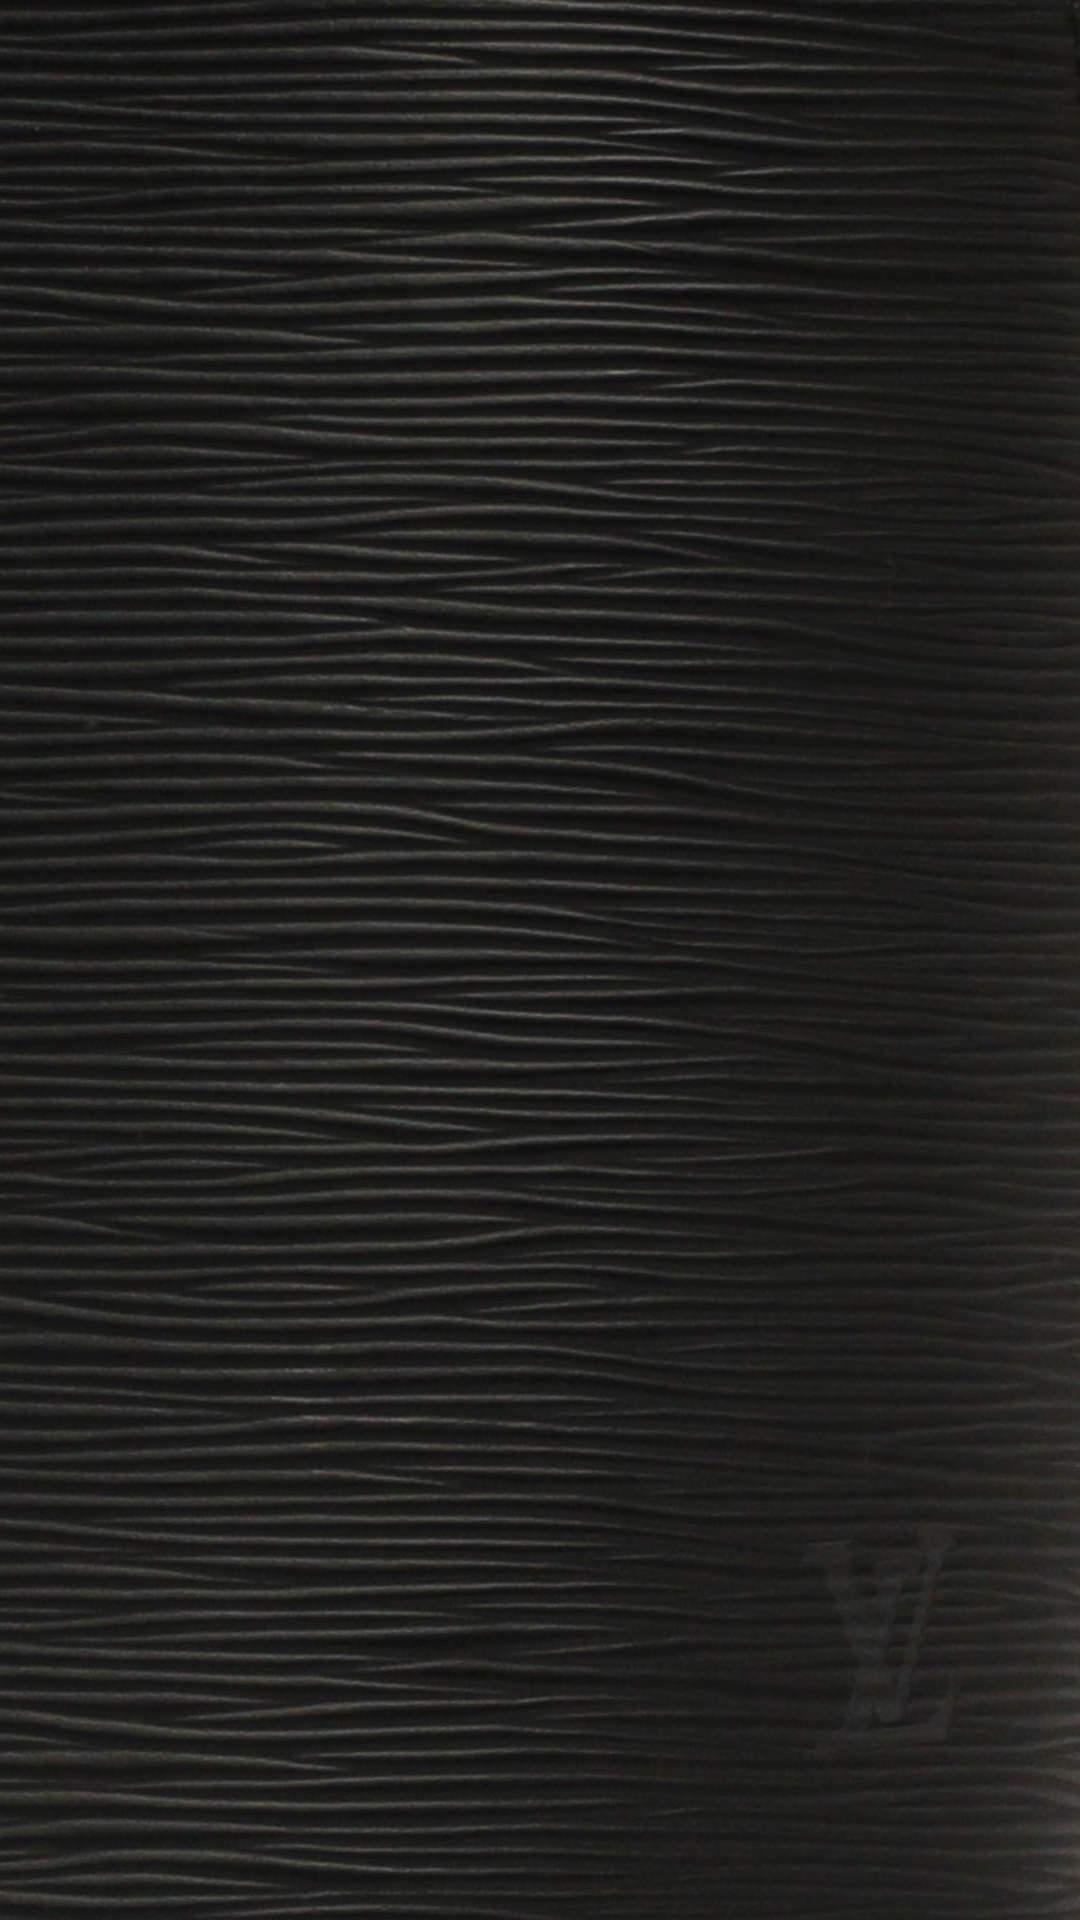 louisvuitton i05 - LOUIS VUITTON[ルイ・ヴィトン]の高画質スマホ壁紙20枚 [iPhone＆Androidに対応]